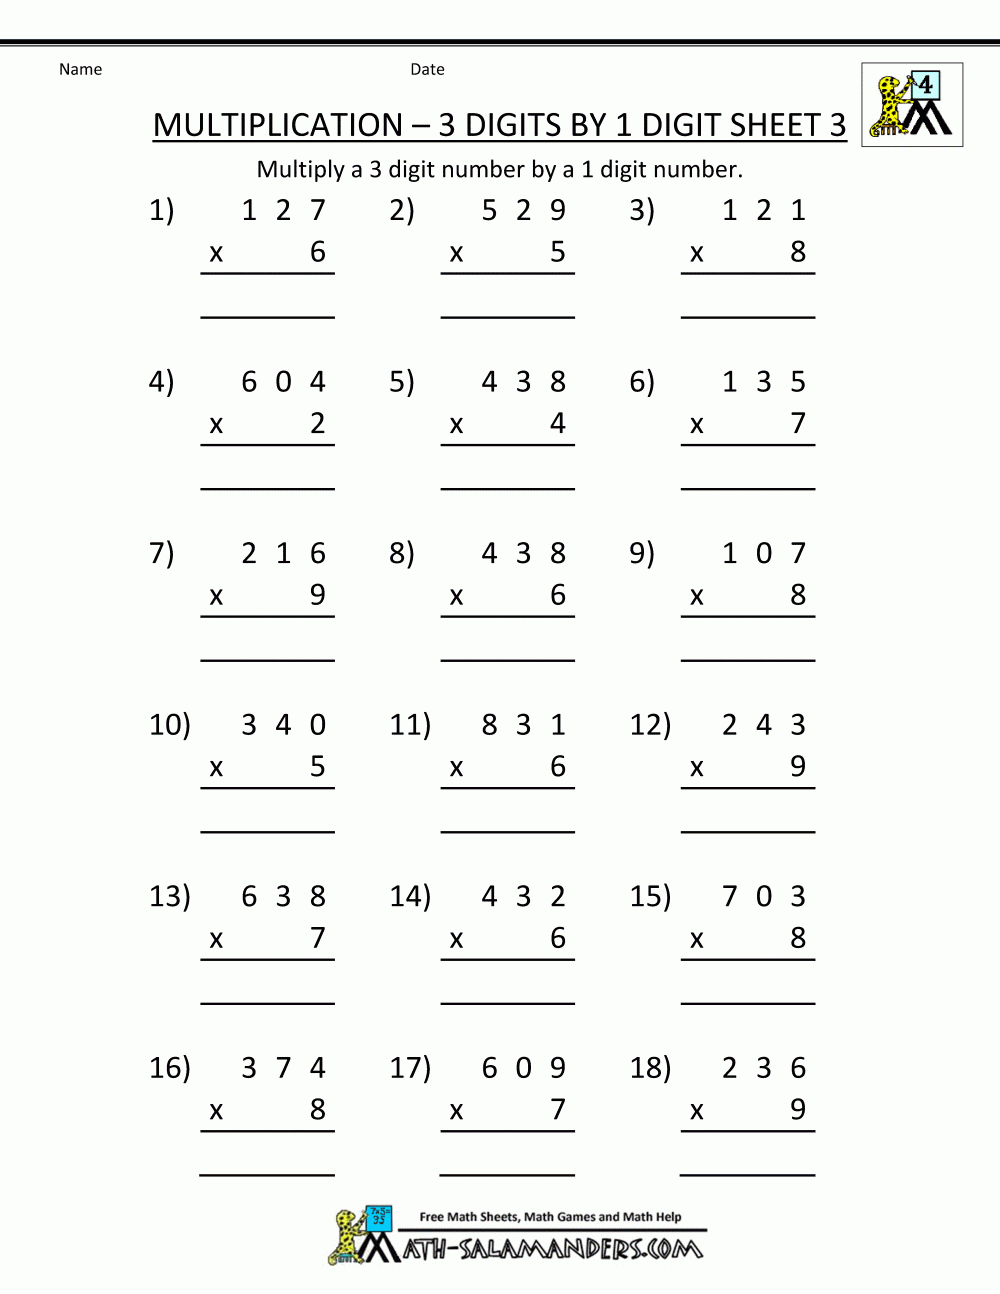 Free Math Sheets Multiplication 3 Digits1 Digit 3 | Math for Multiplication Quiz Printable 4Th Grade